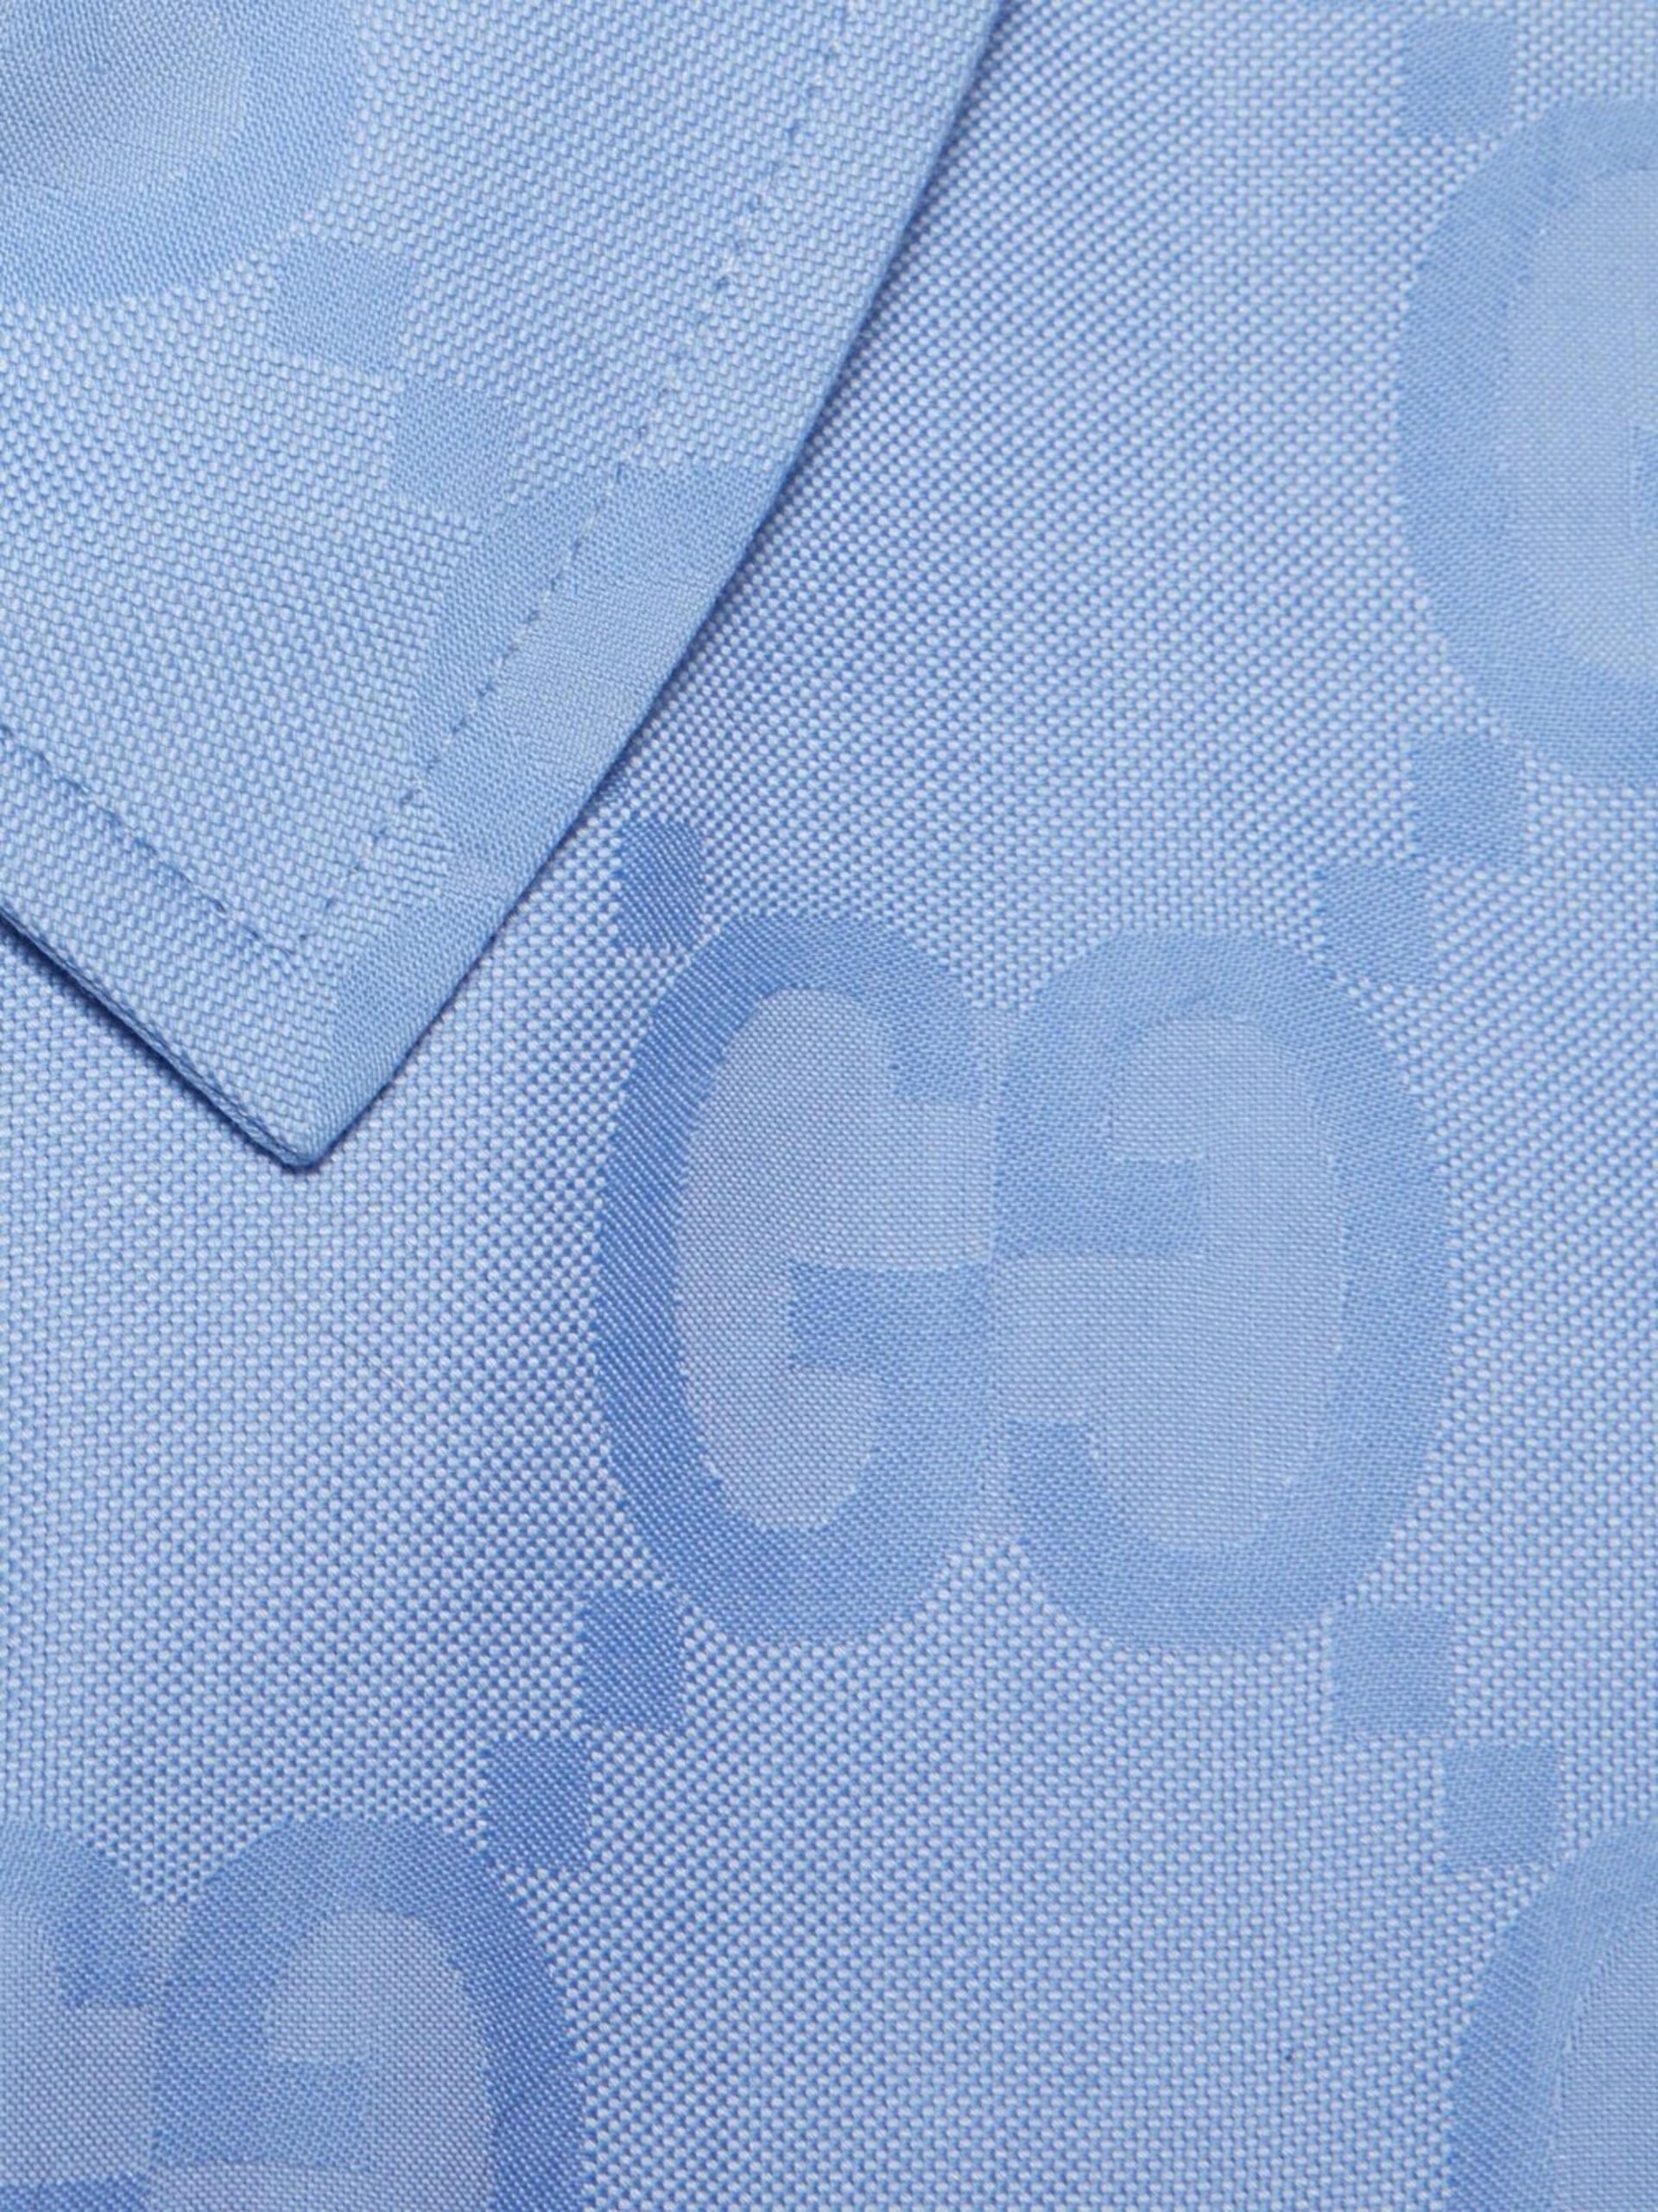 Gucci gg Logo Print Dress in Blue | Lyst